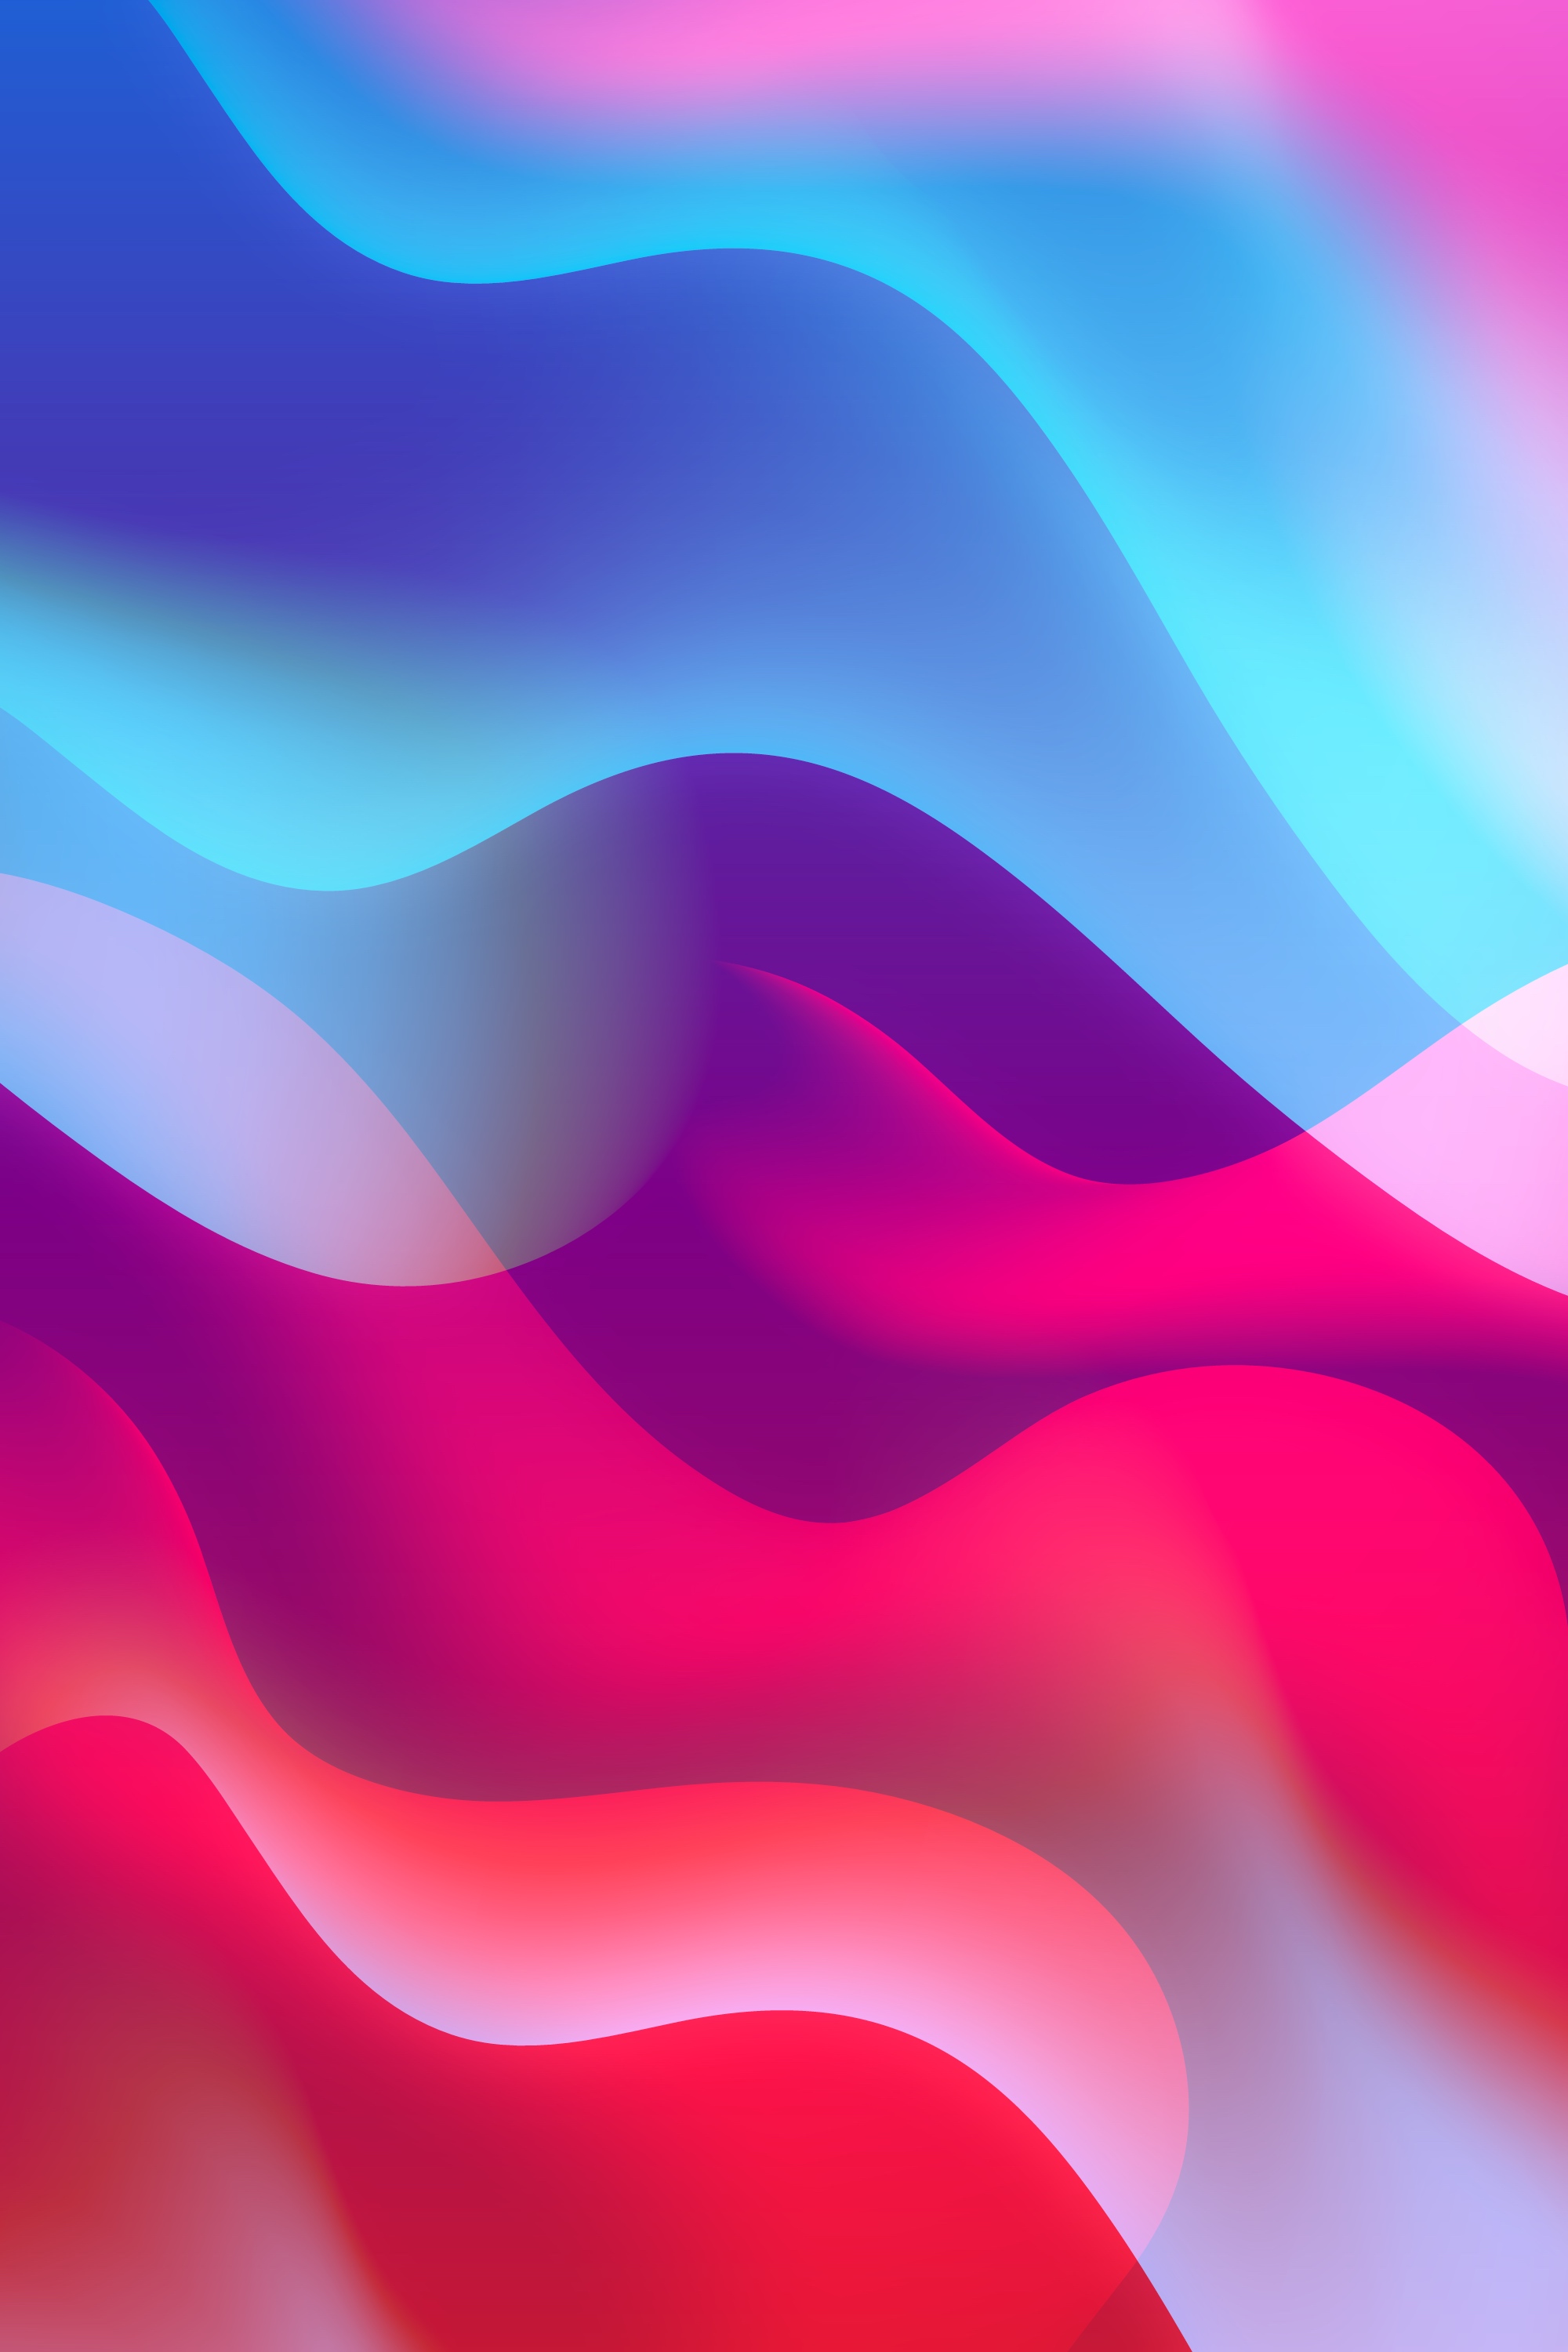 Spectrum wallpaper for mac